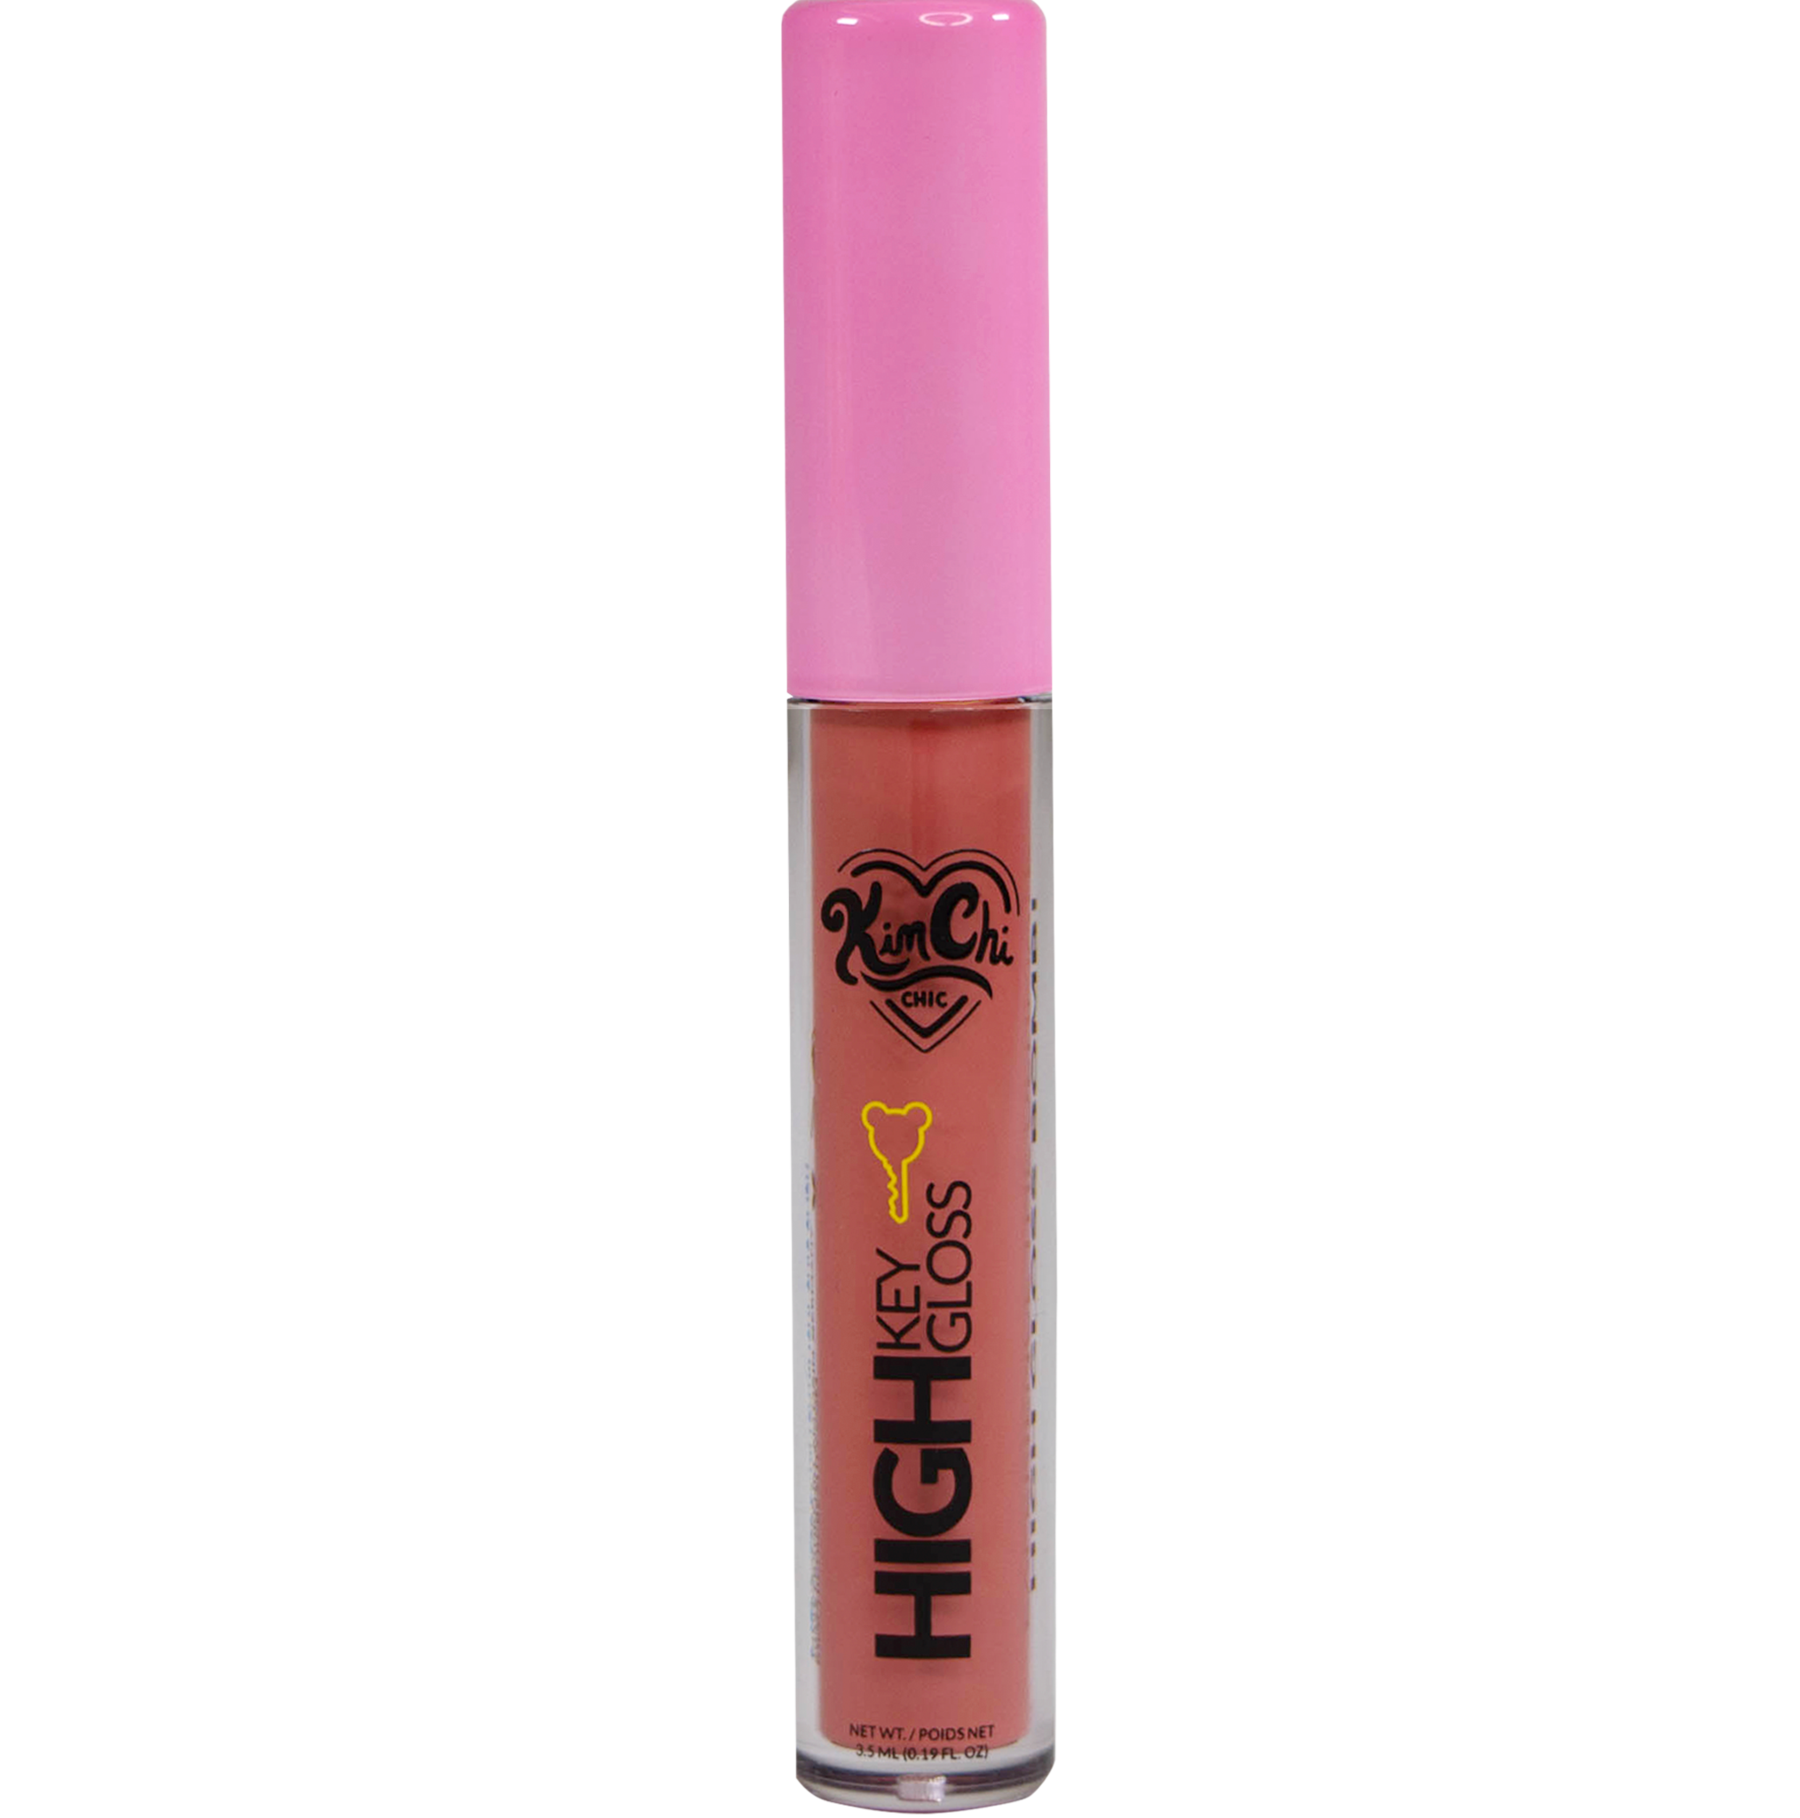 KimChi Chic - High Key Gloss Blonde Raisin